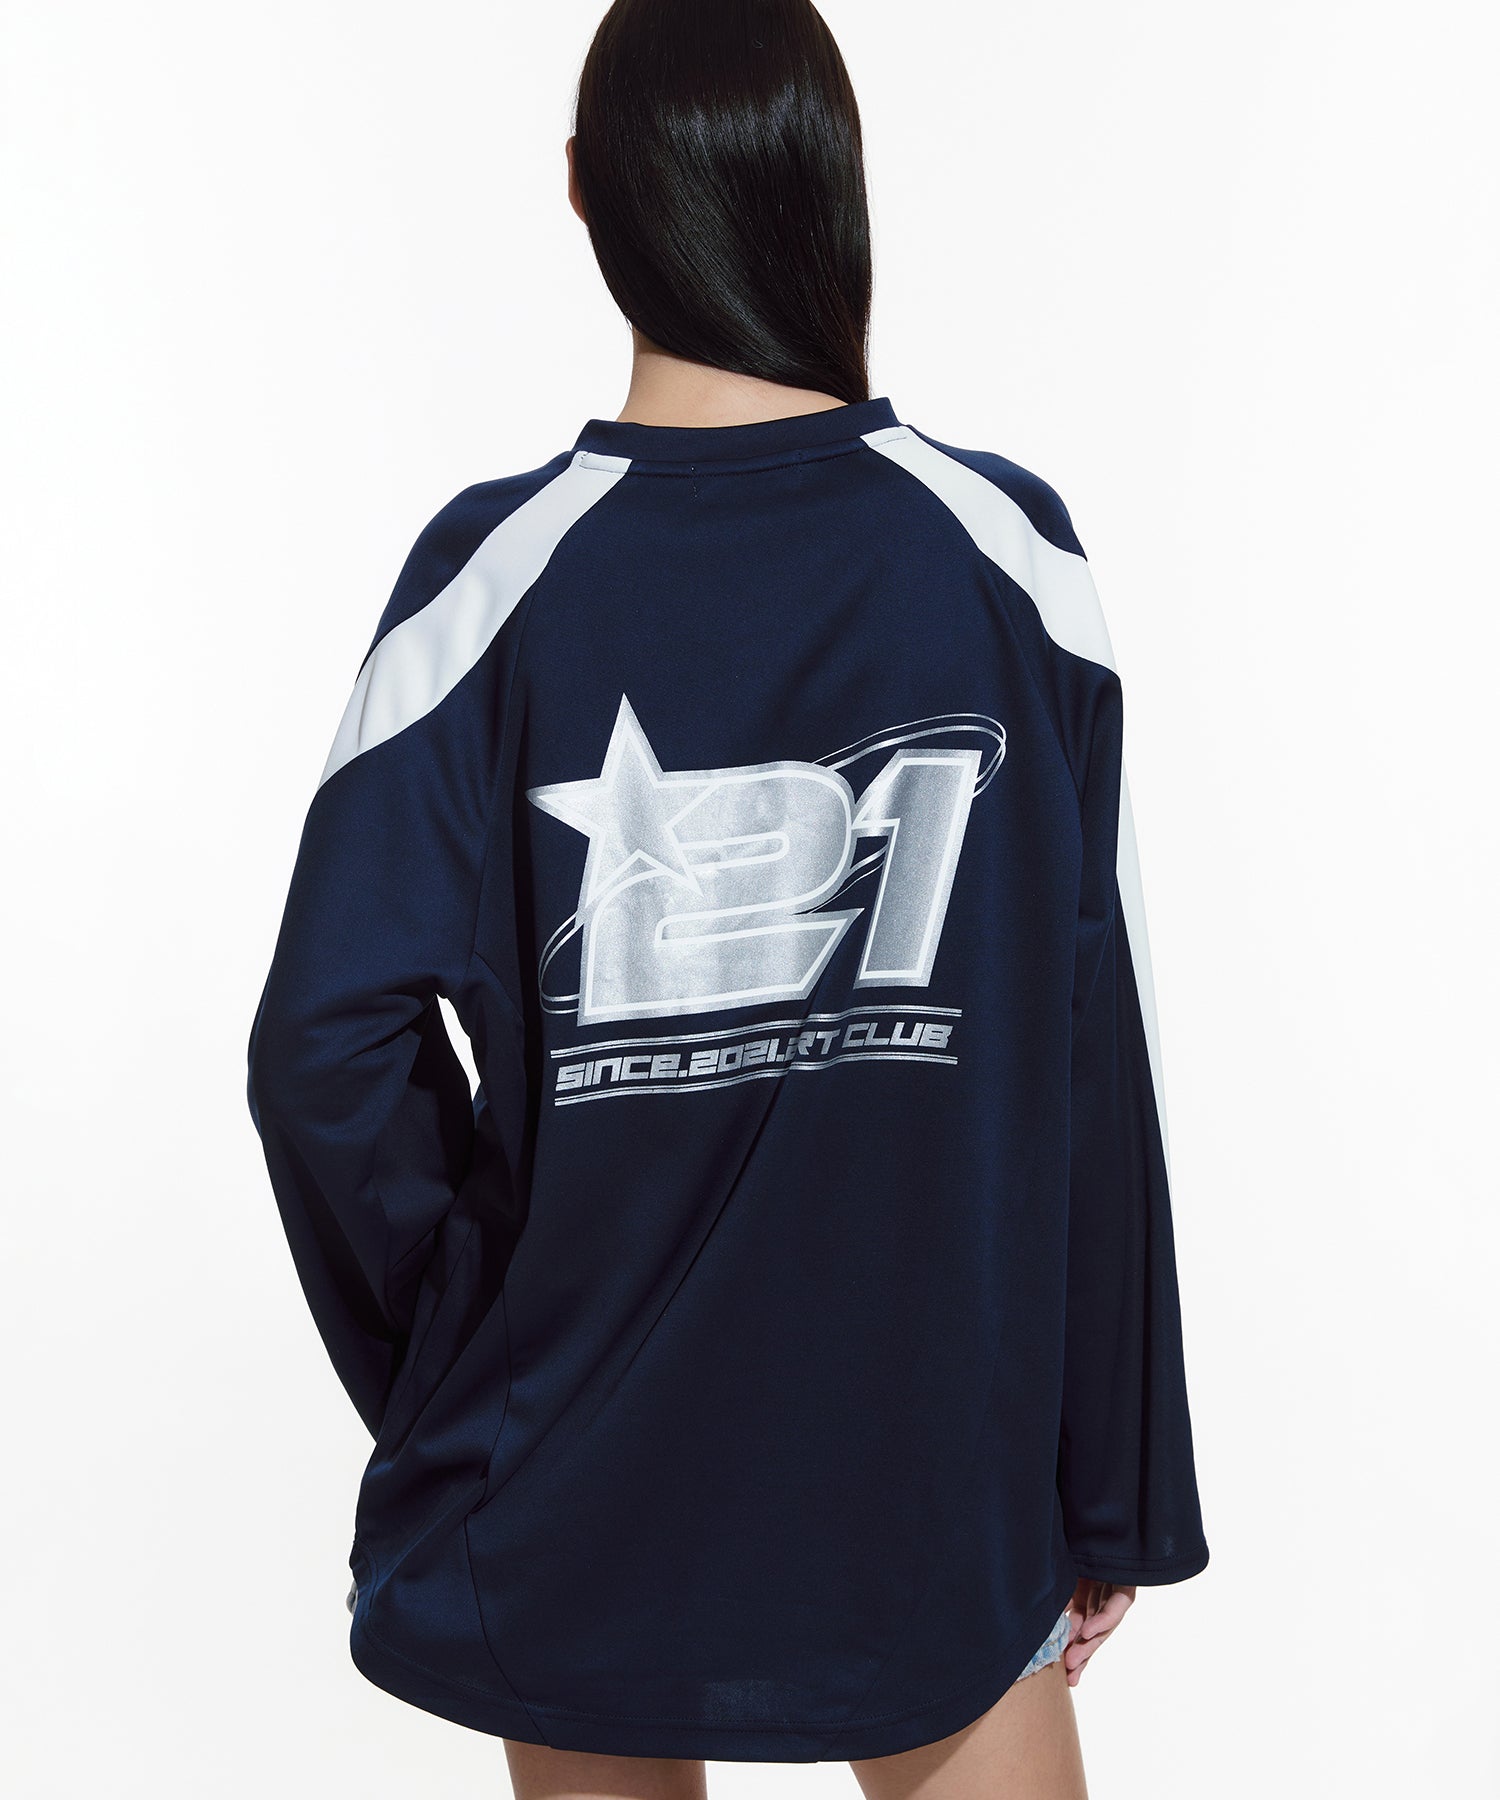 Lee sport XL 運動透氣滑布材質上衣運動衣T-shirt big Size, 名牌精品, 精品服飾在旋轉拍賣